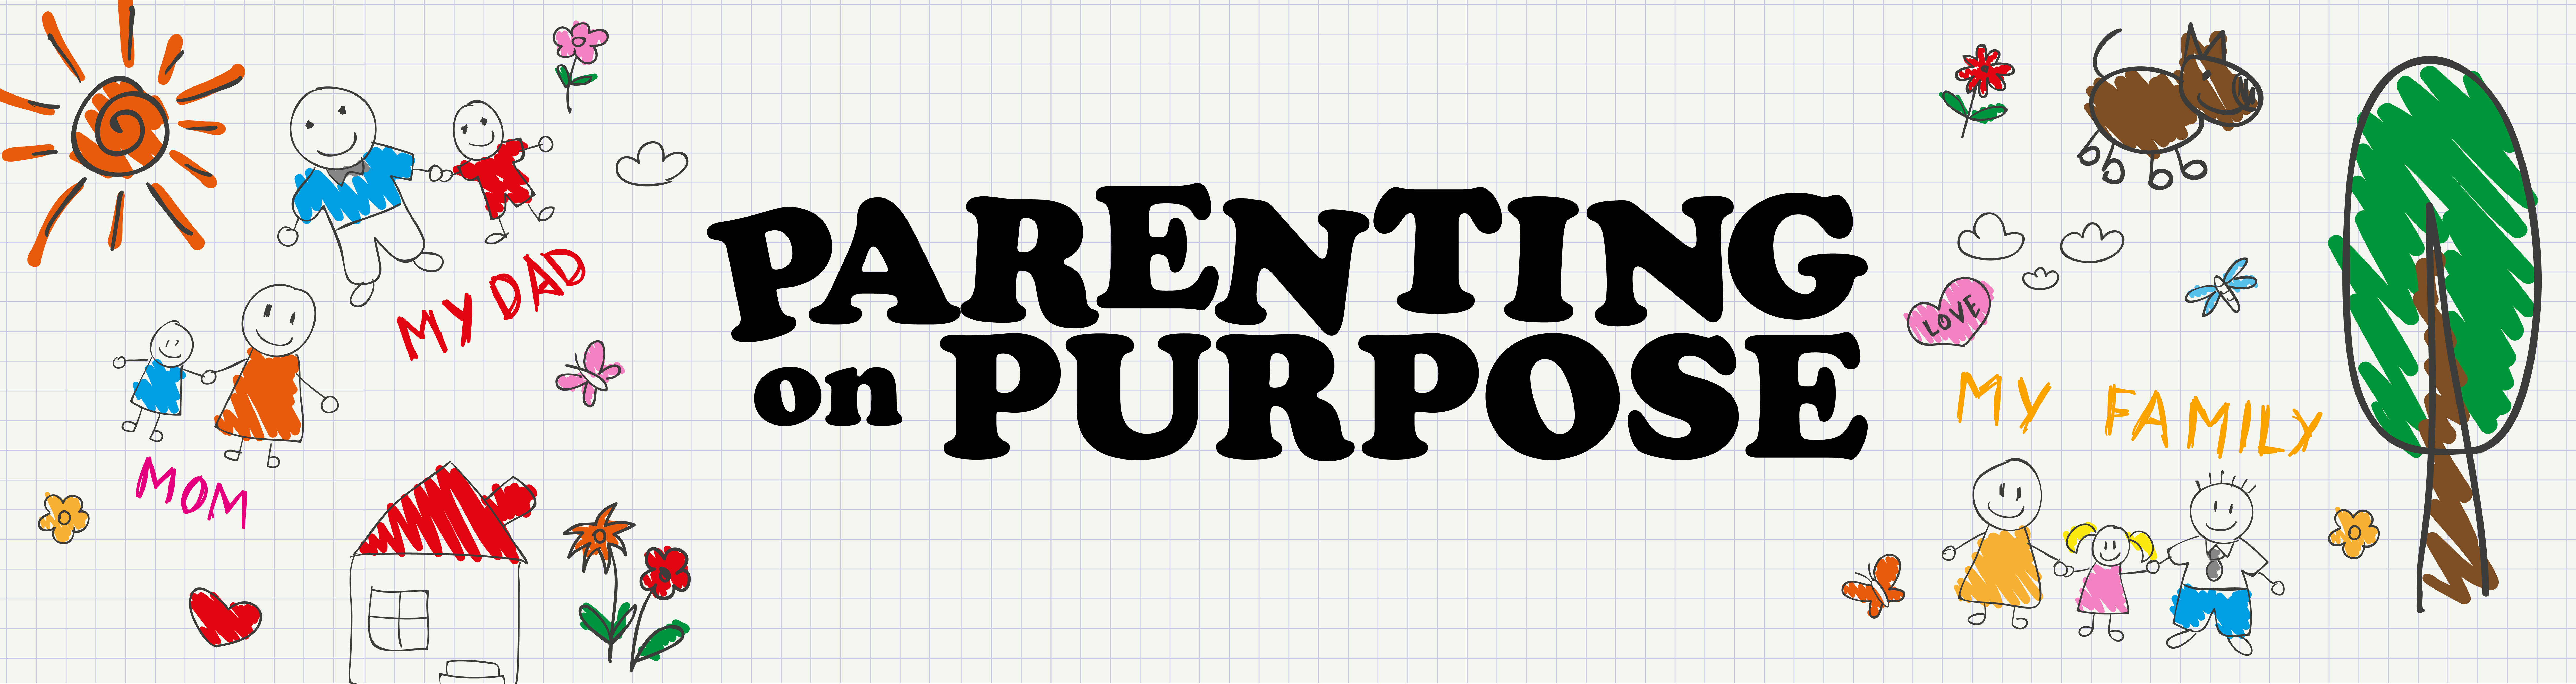 Parenting on Purpose Pro